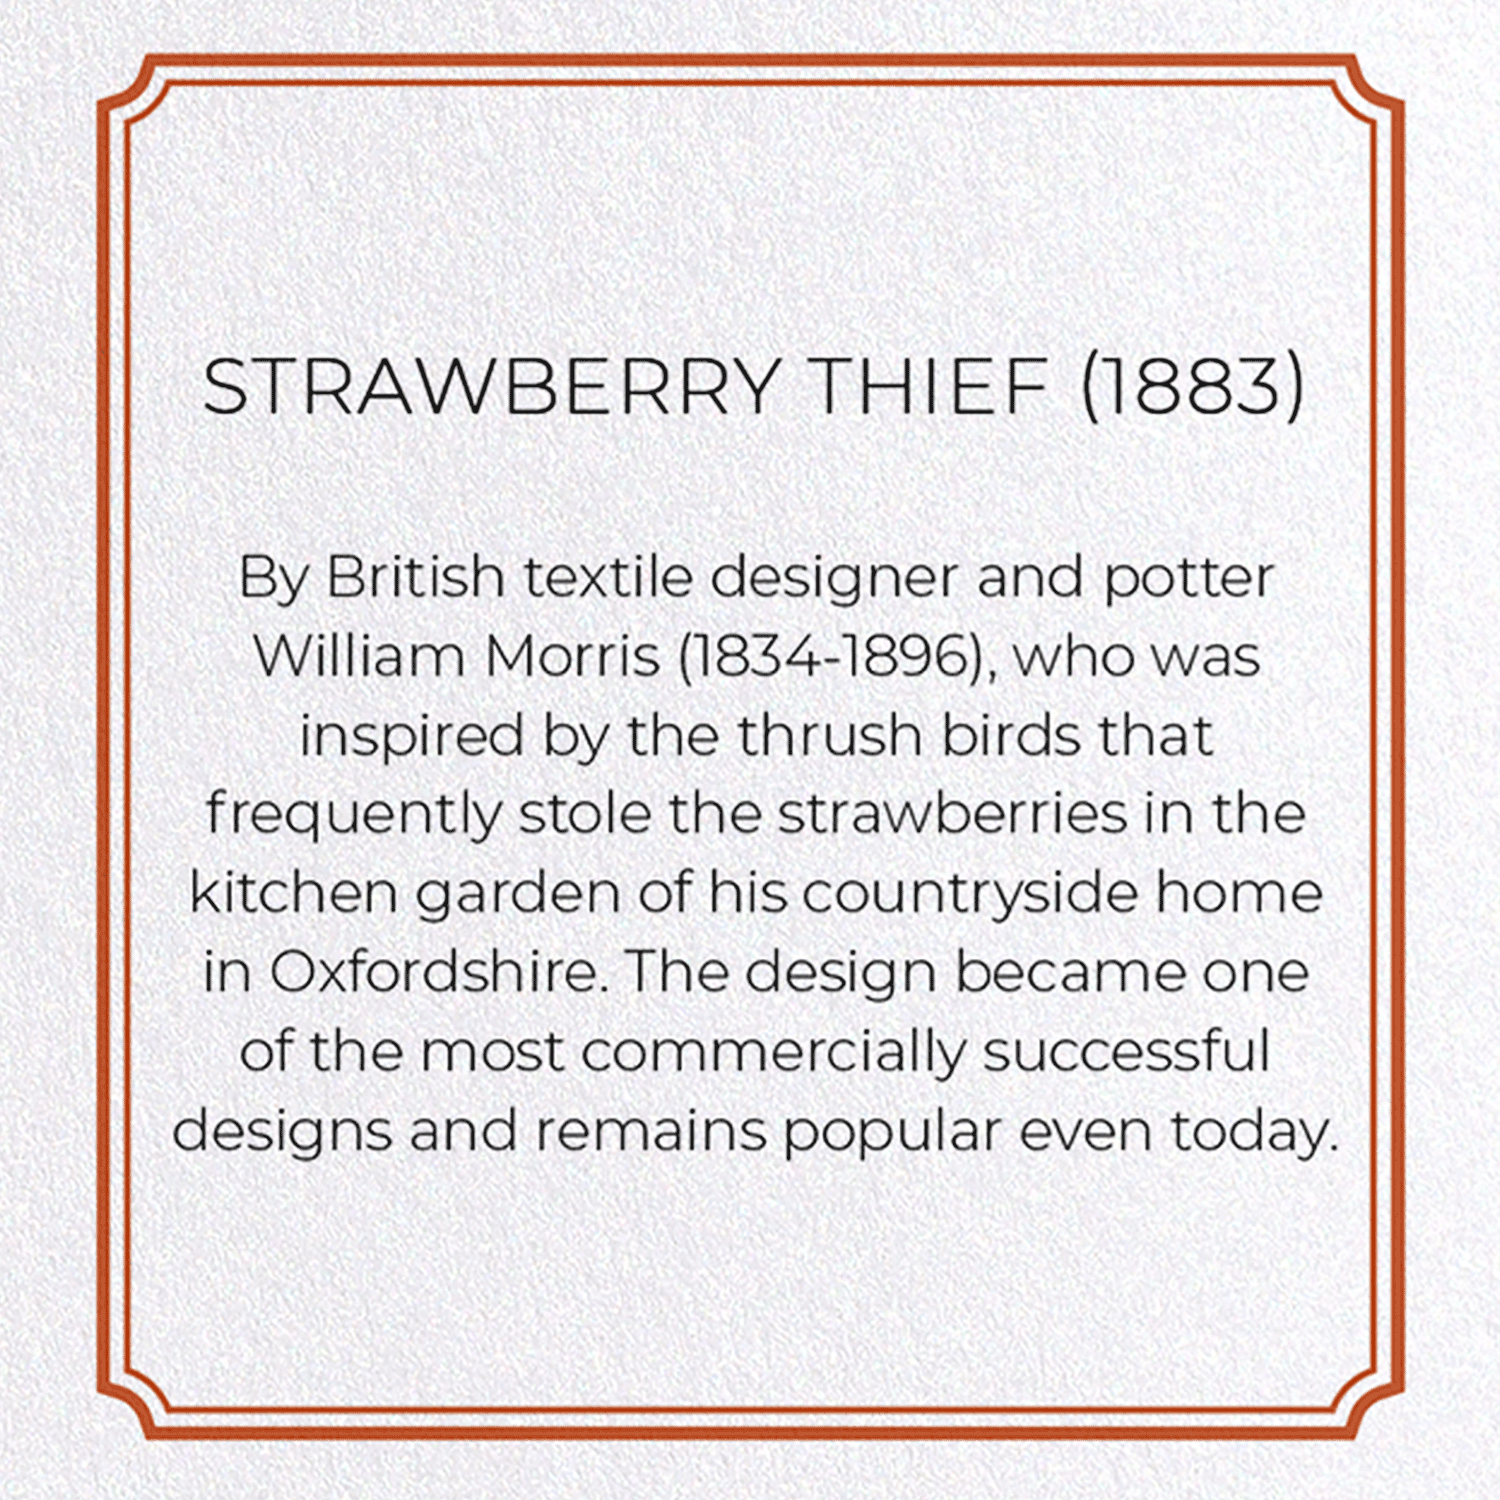 STRAWBERRY THIEF (1883): Pattern Greeting Card